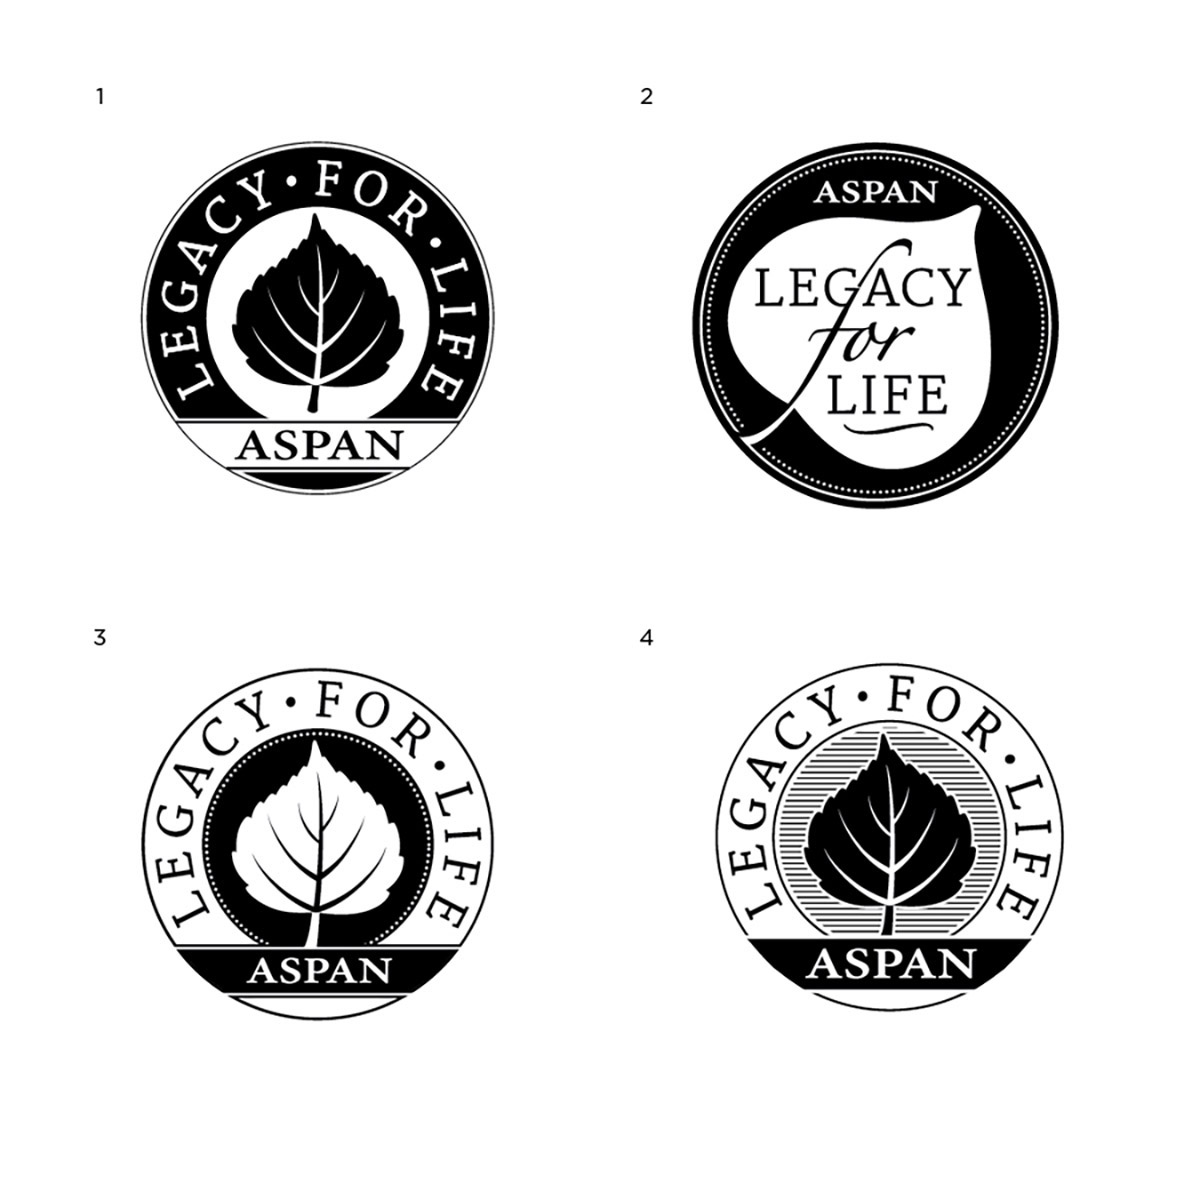 aspan Legacy for Life Medal outlines copy